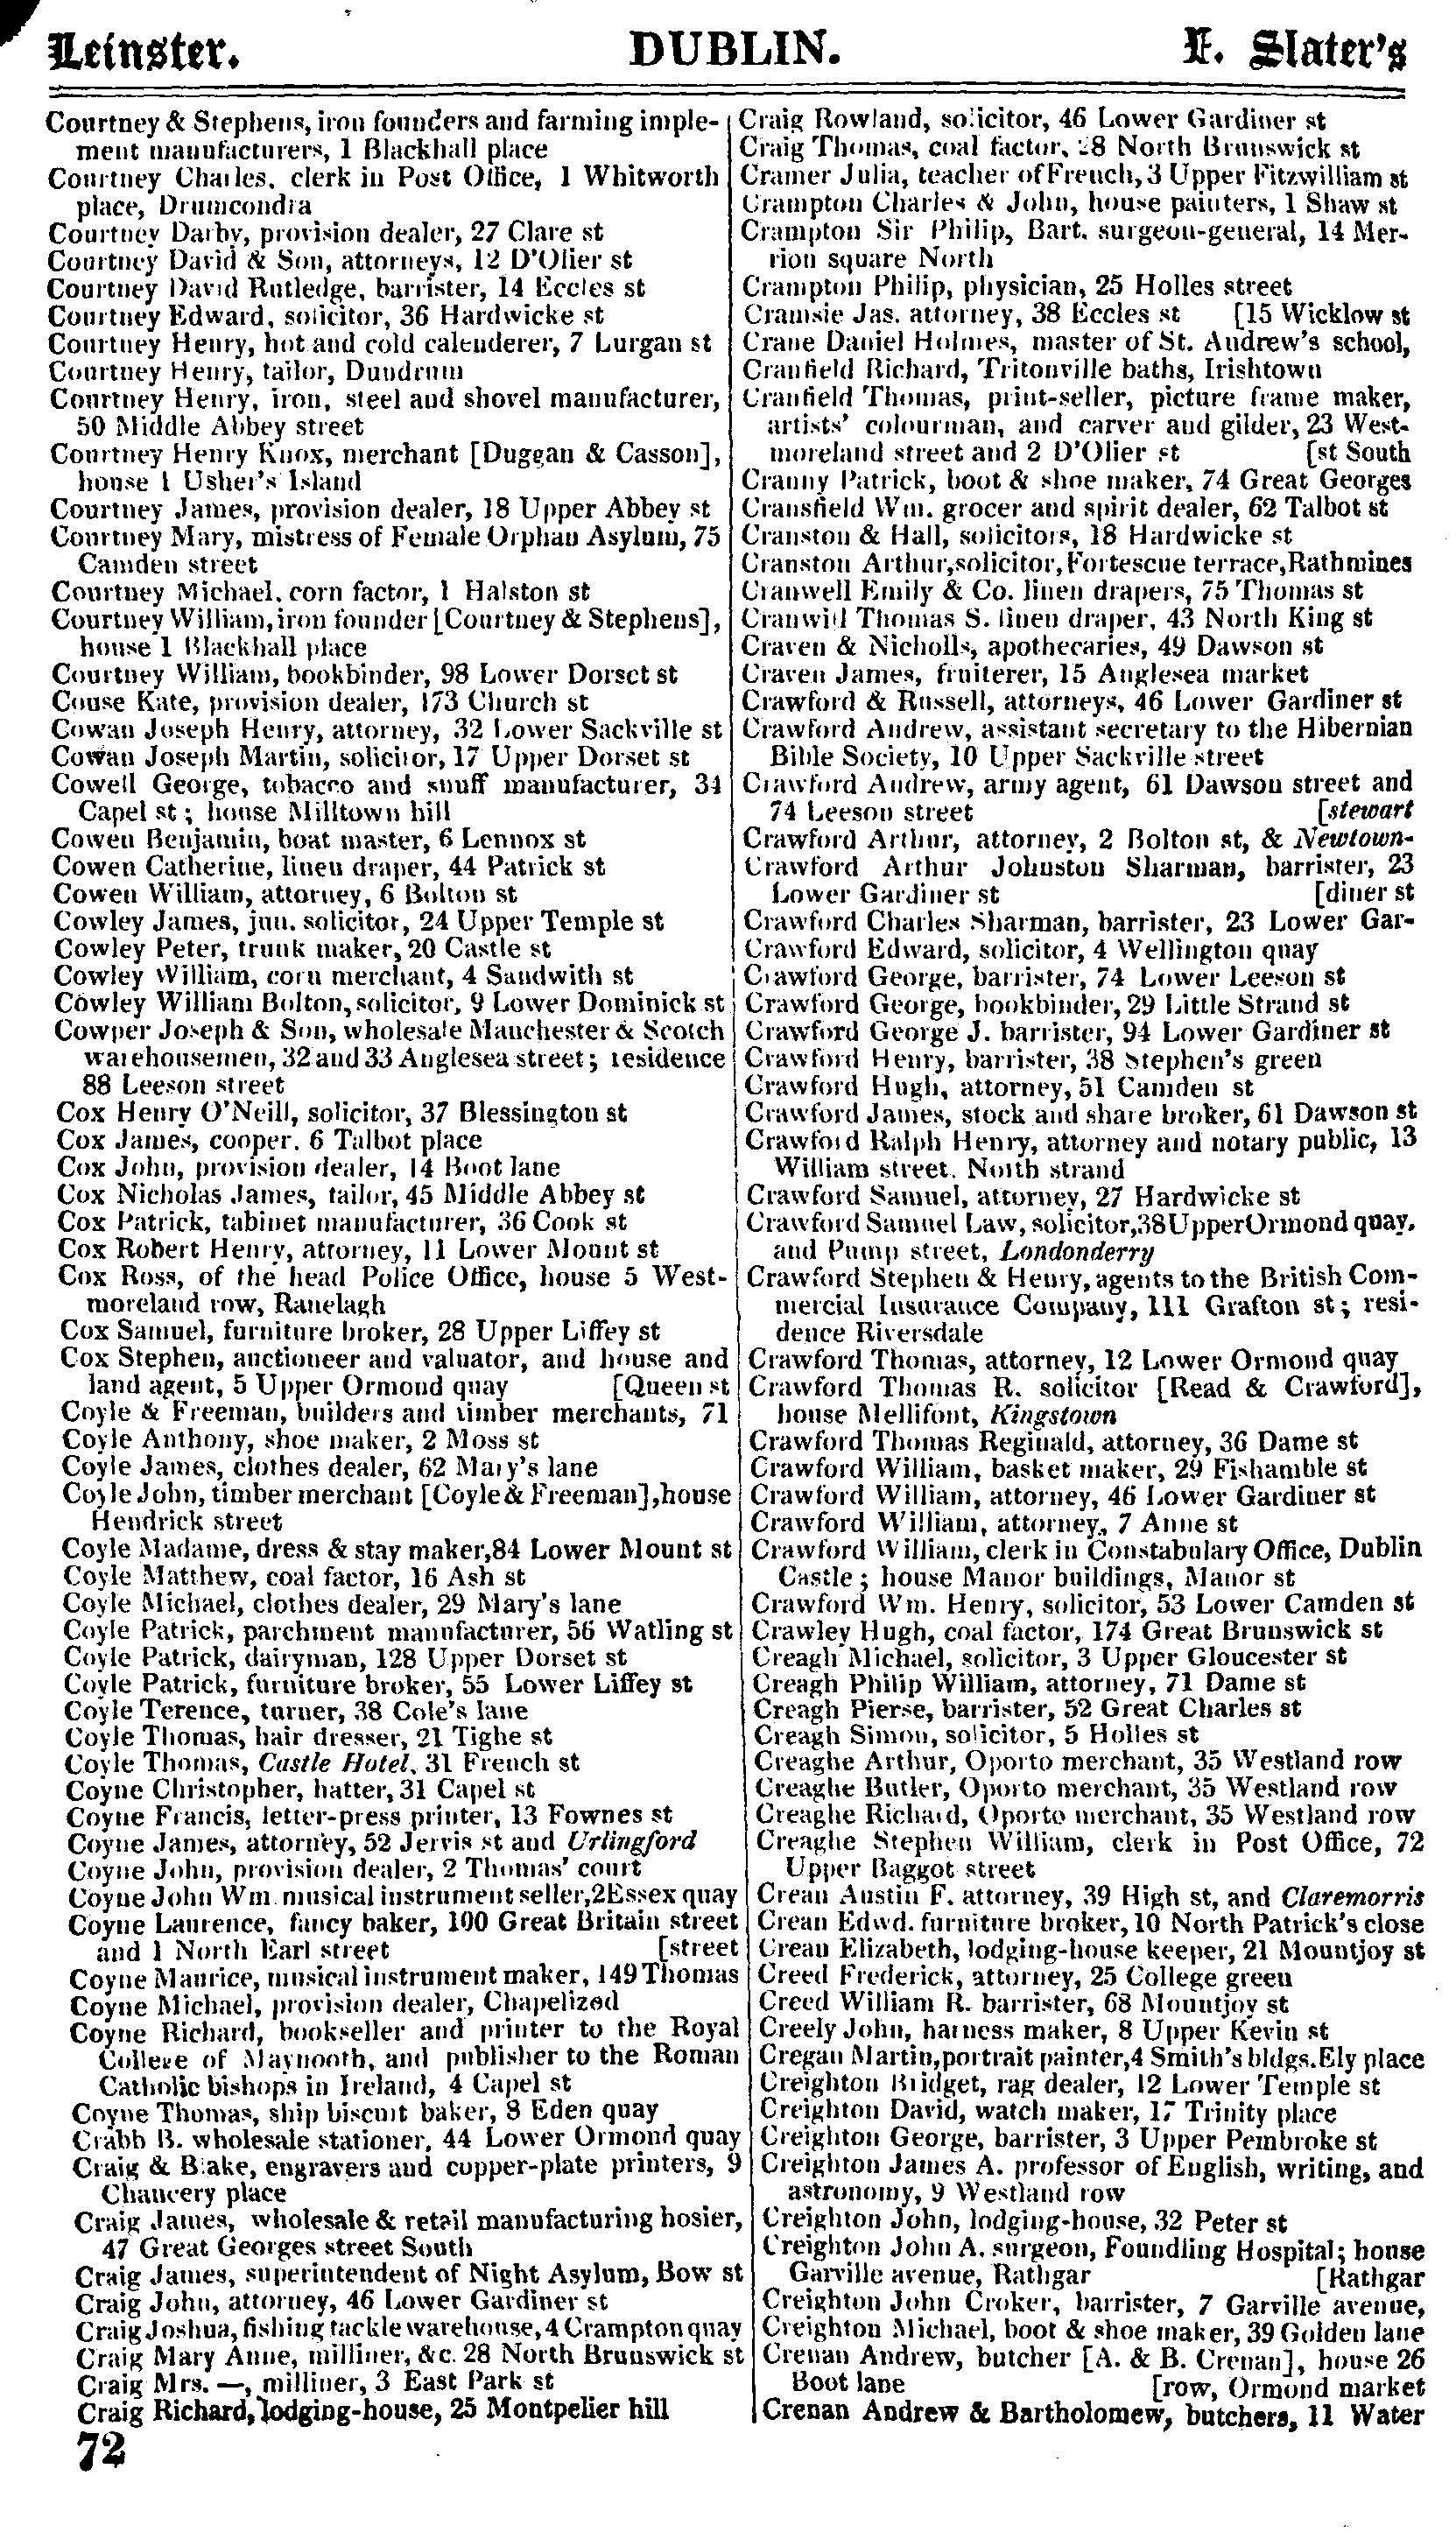 C:\Users\Virginia Rundle\Documents\Ancestry\Cranwill\Slaters Dublin Directory Thomas S Cranwill Linen Draper 1846.jpg